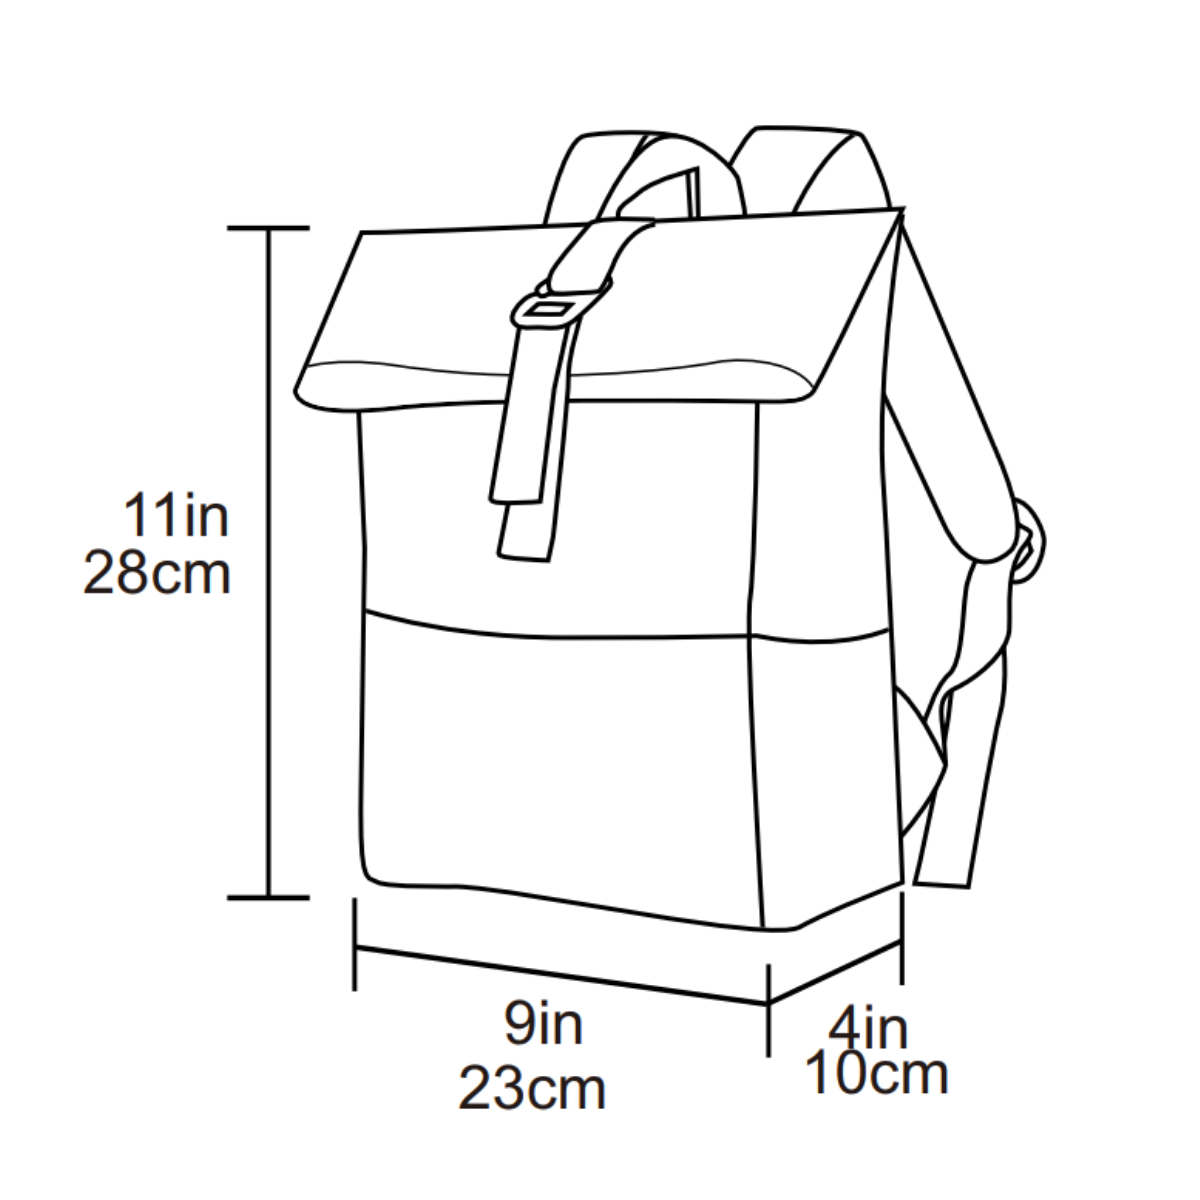 YLX Classic School Bag Dimensions